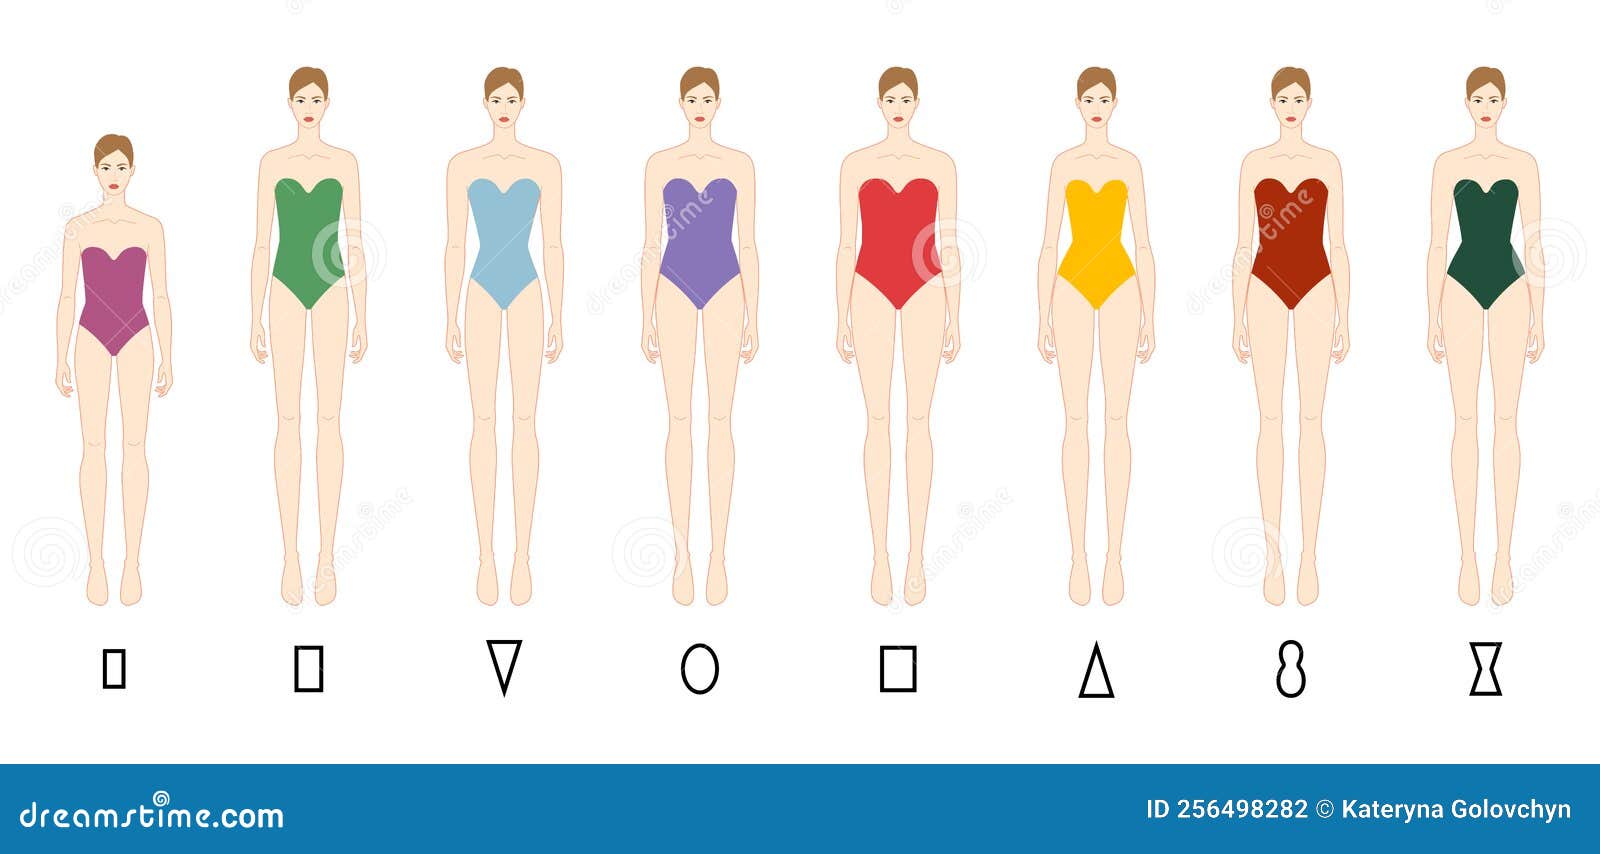 https://thumbs.dreamstime.com/z/set-women-body-shape-types-apple-pear-column-brick-hourglass-inverted-triangle-petite-underwear-female-vector-illustration-256498282.jpg